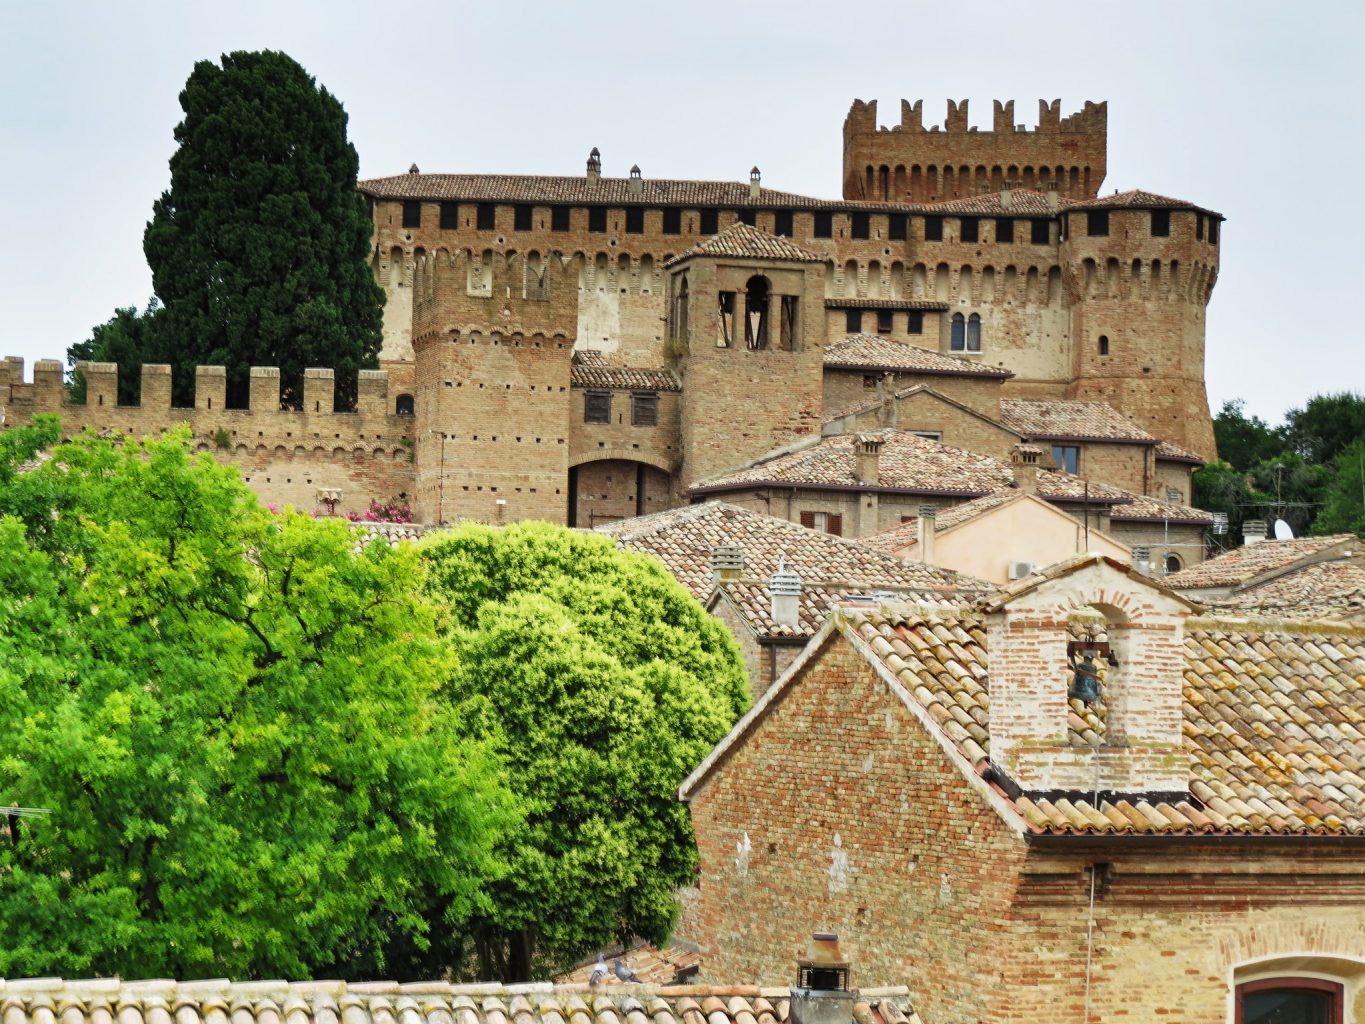 alt="Gradara Castle Le Marche Italy "